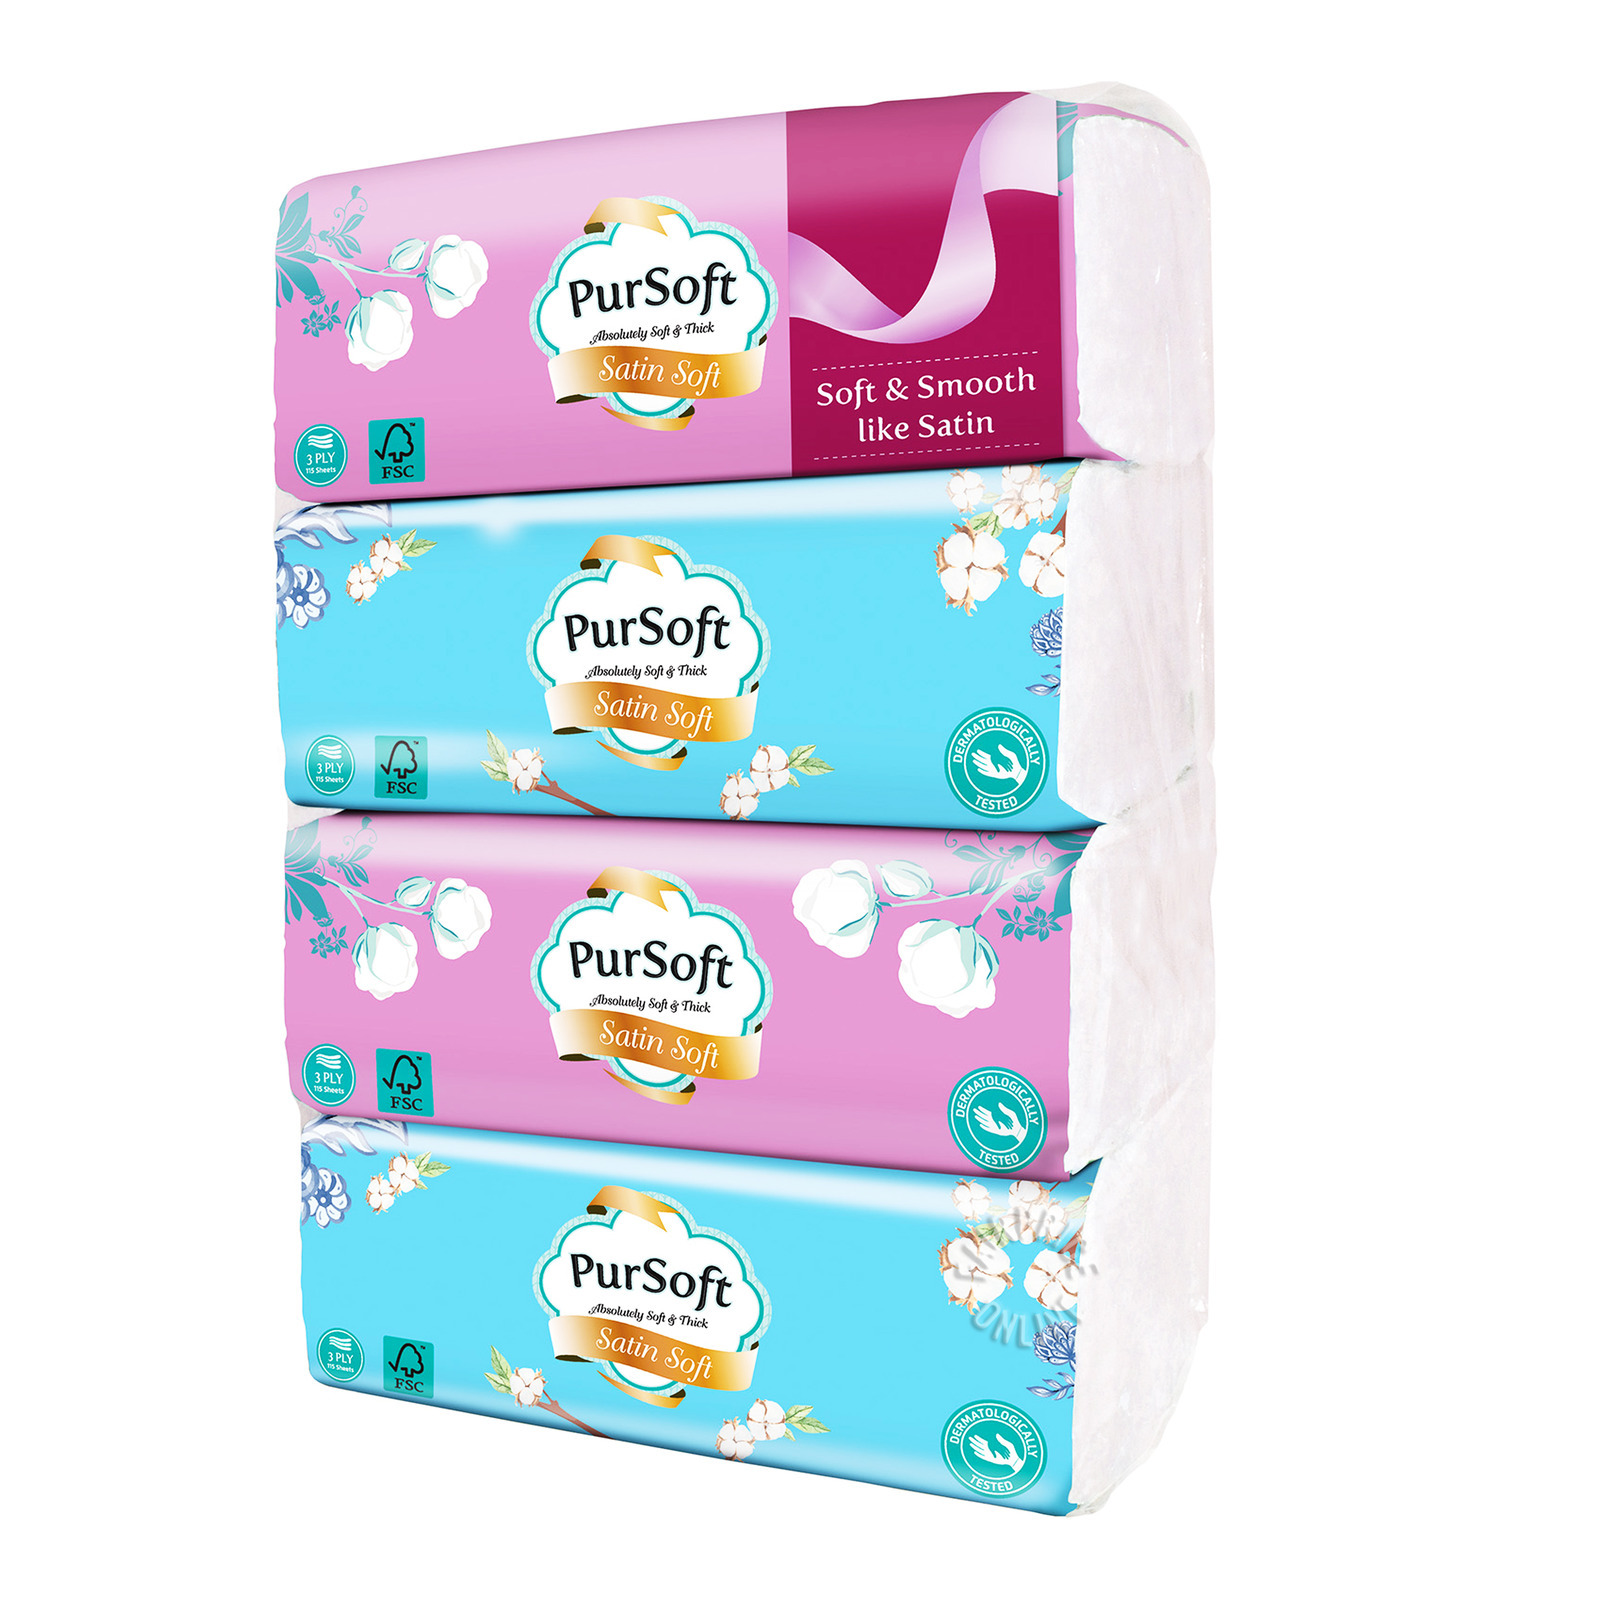 PurSoft Tissue Soft Pack - Satin Soft (3ply)